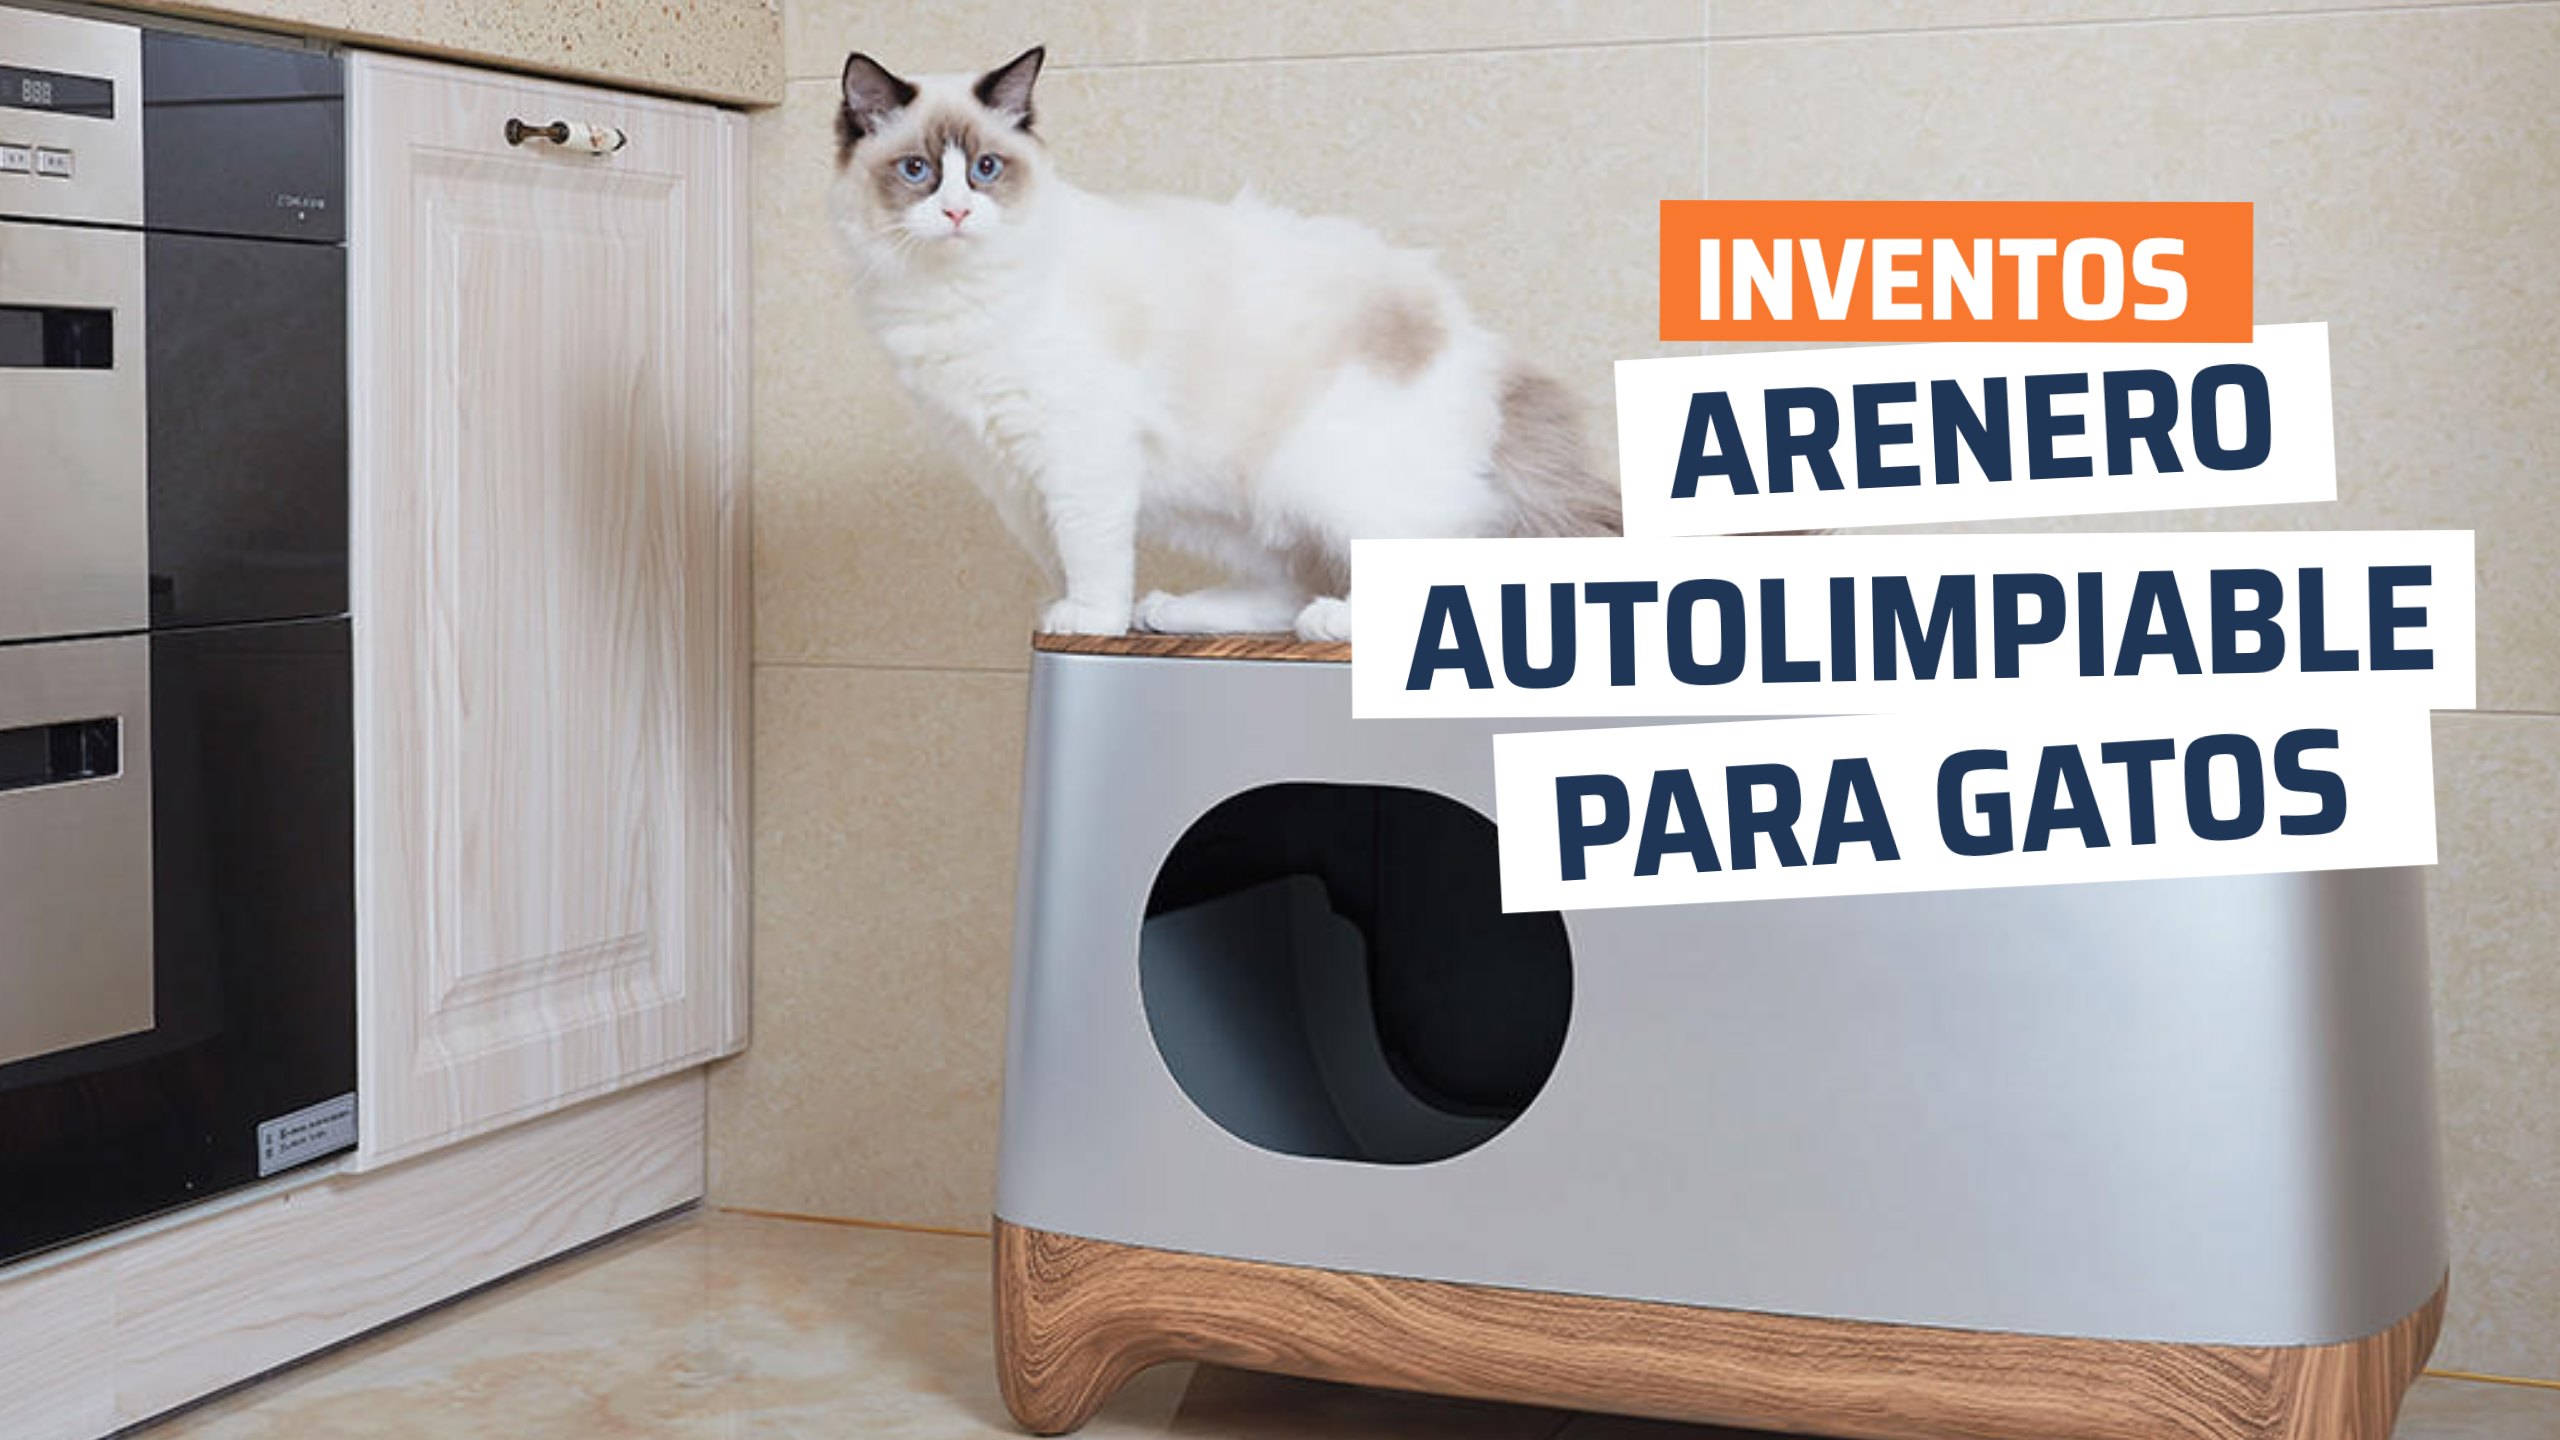 Arenero Autolimpiable Self Cleaning Para Gatos